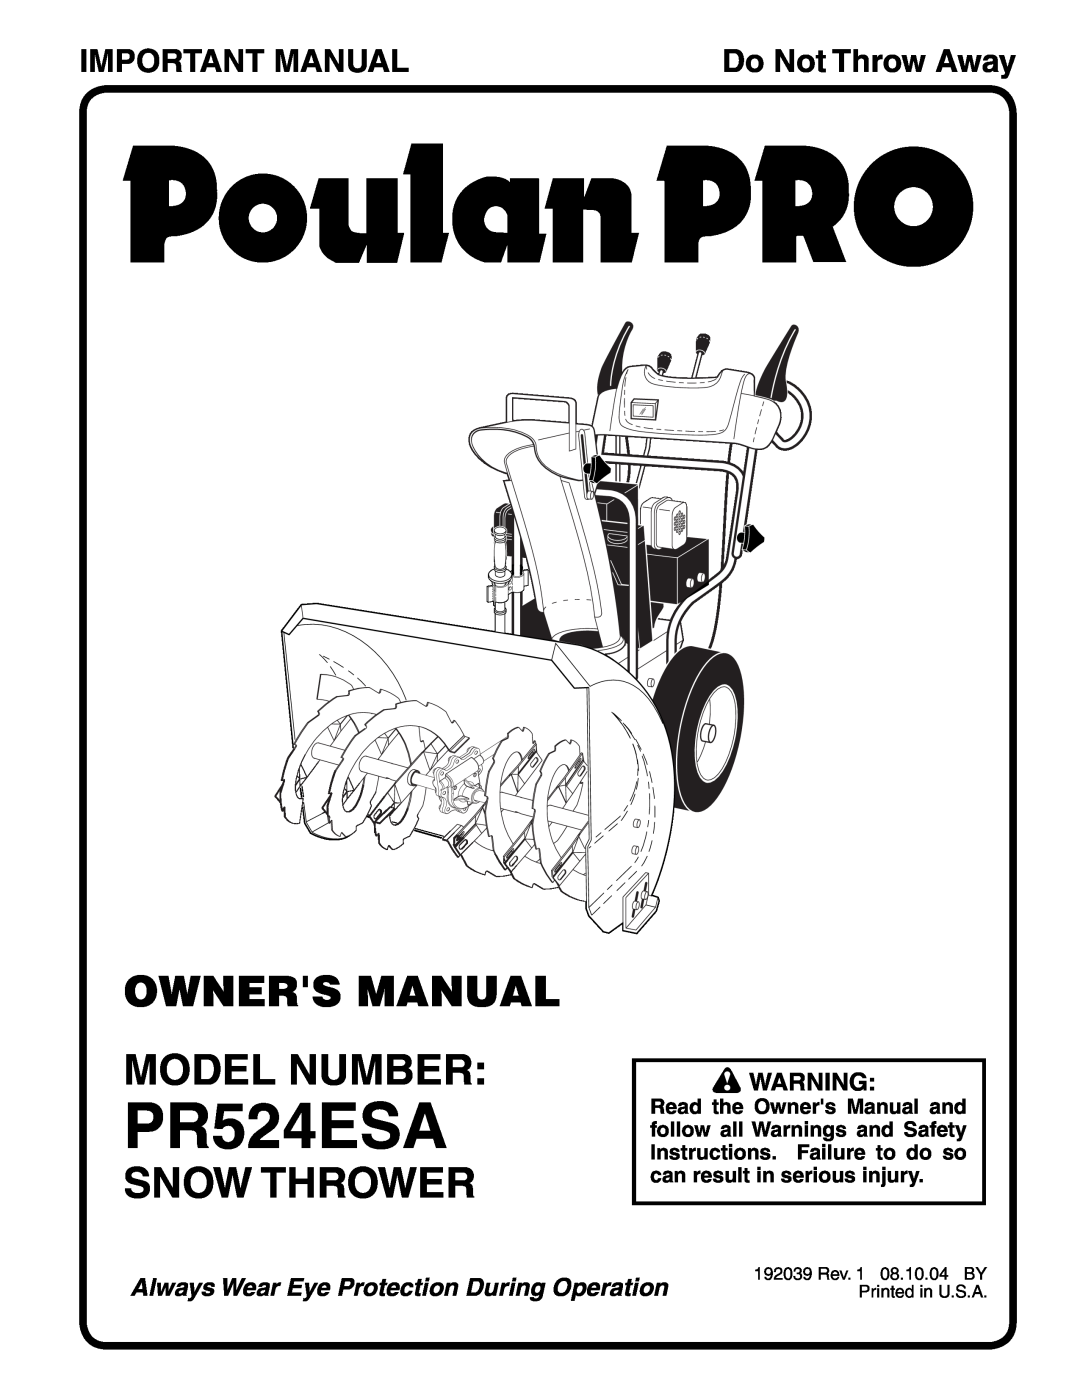 Poulan PR524ESA owner manual Snow Thrower, Important Manual, Do Not Throw Away 